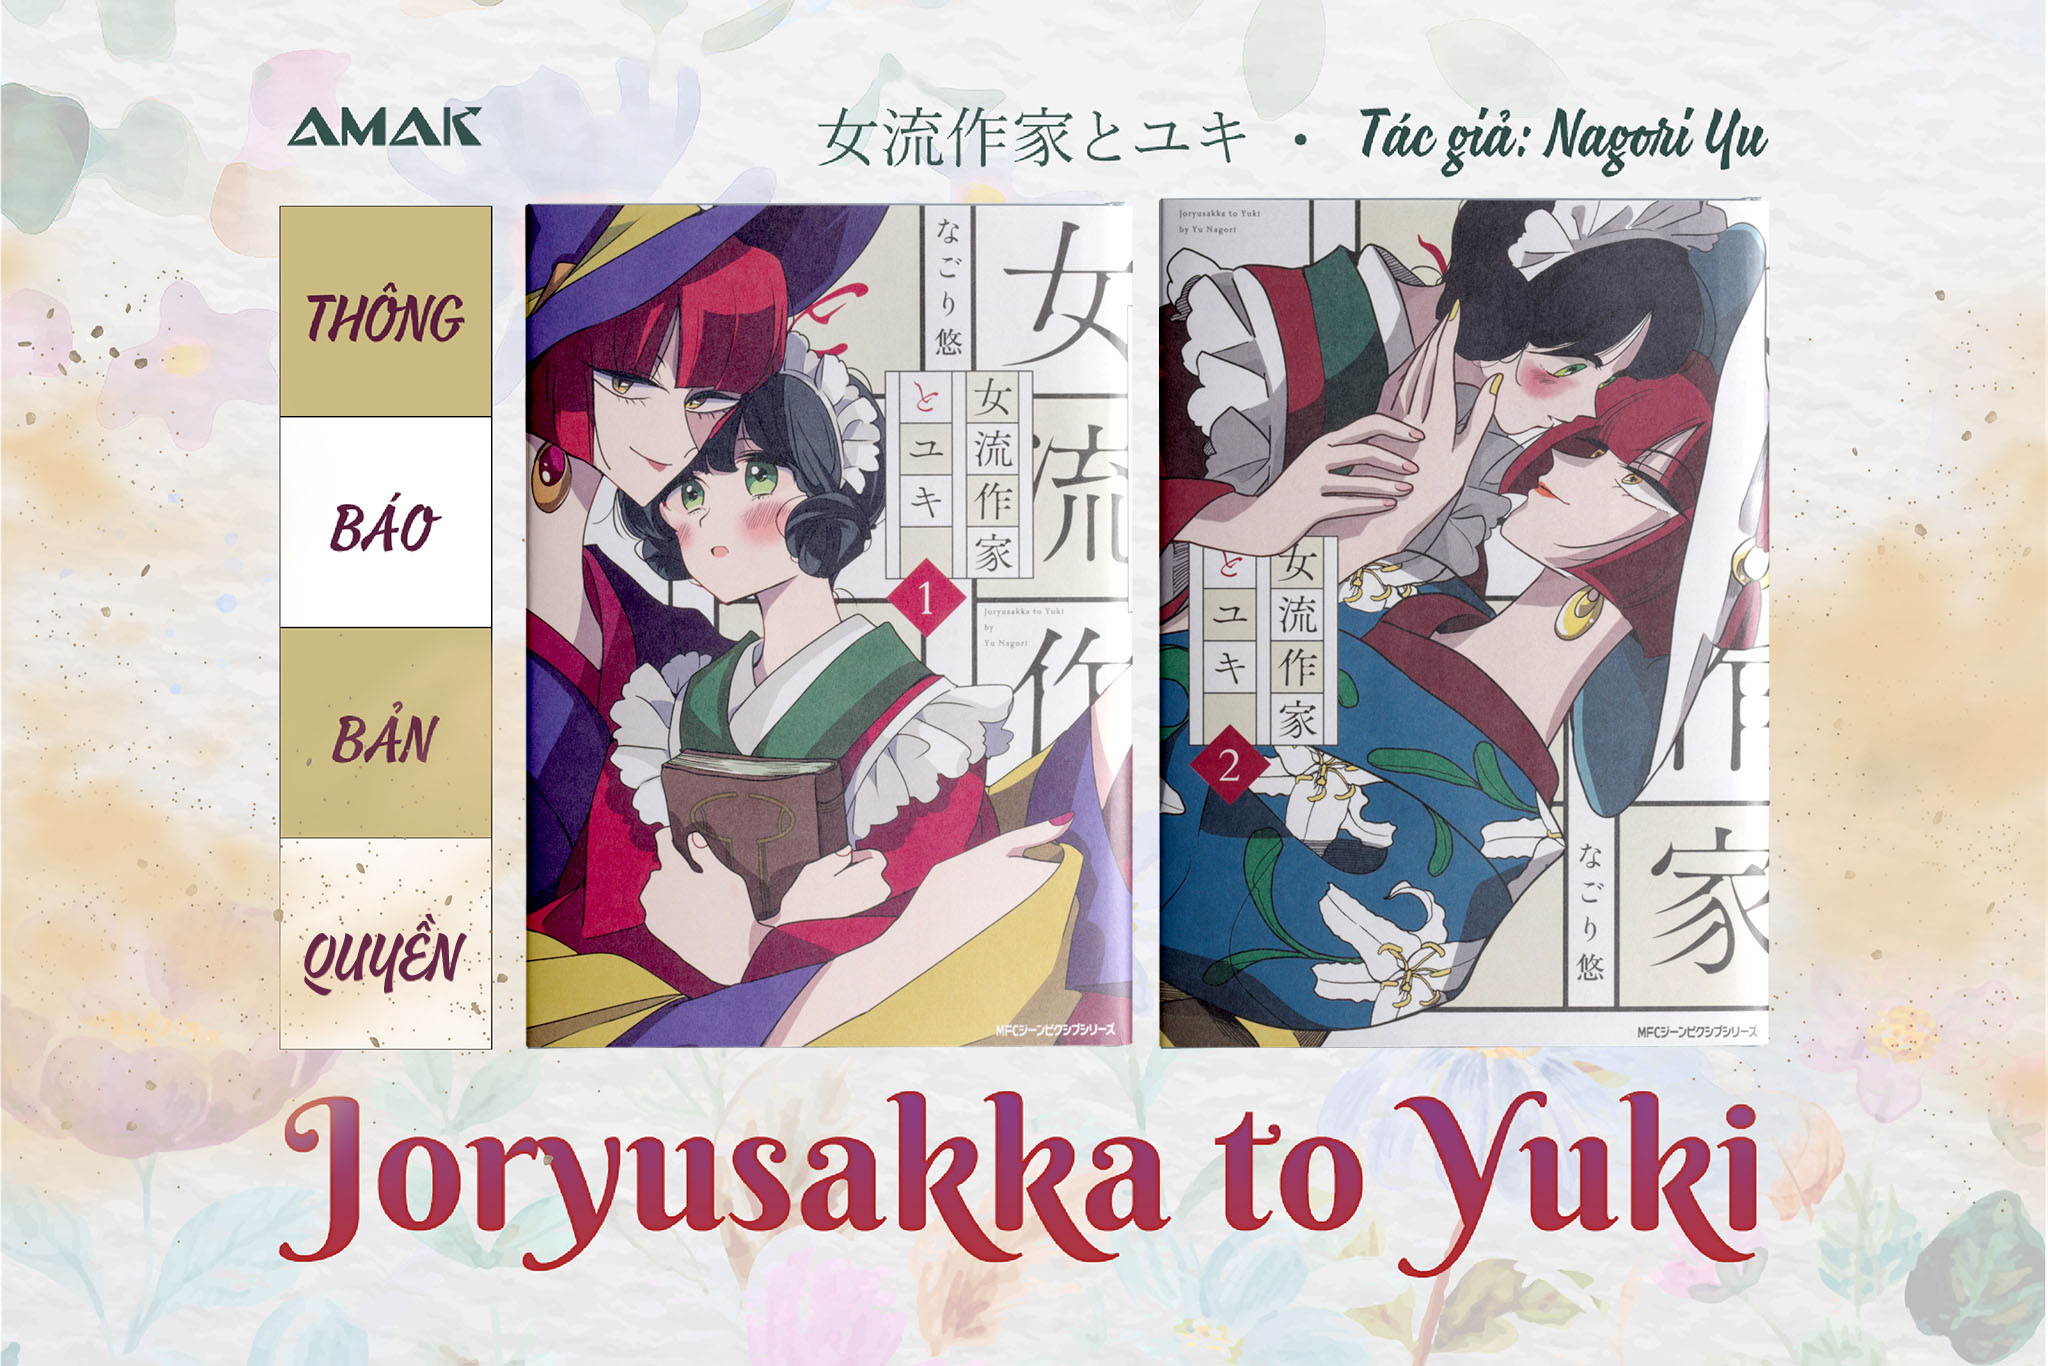 Yuki Và Nữ Văn Sĩ - Joryusakka To Yuki - 女流作家とユキ